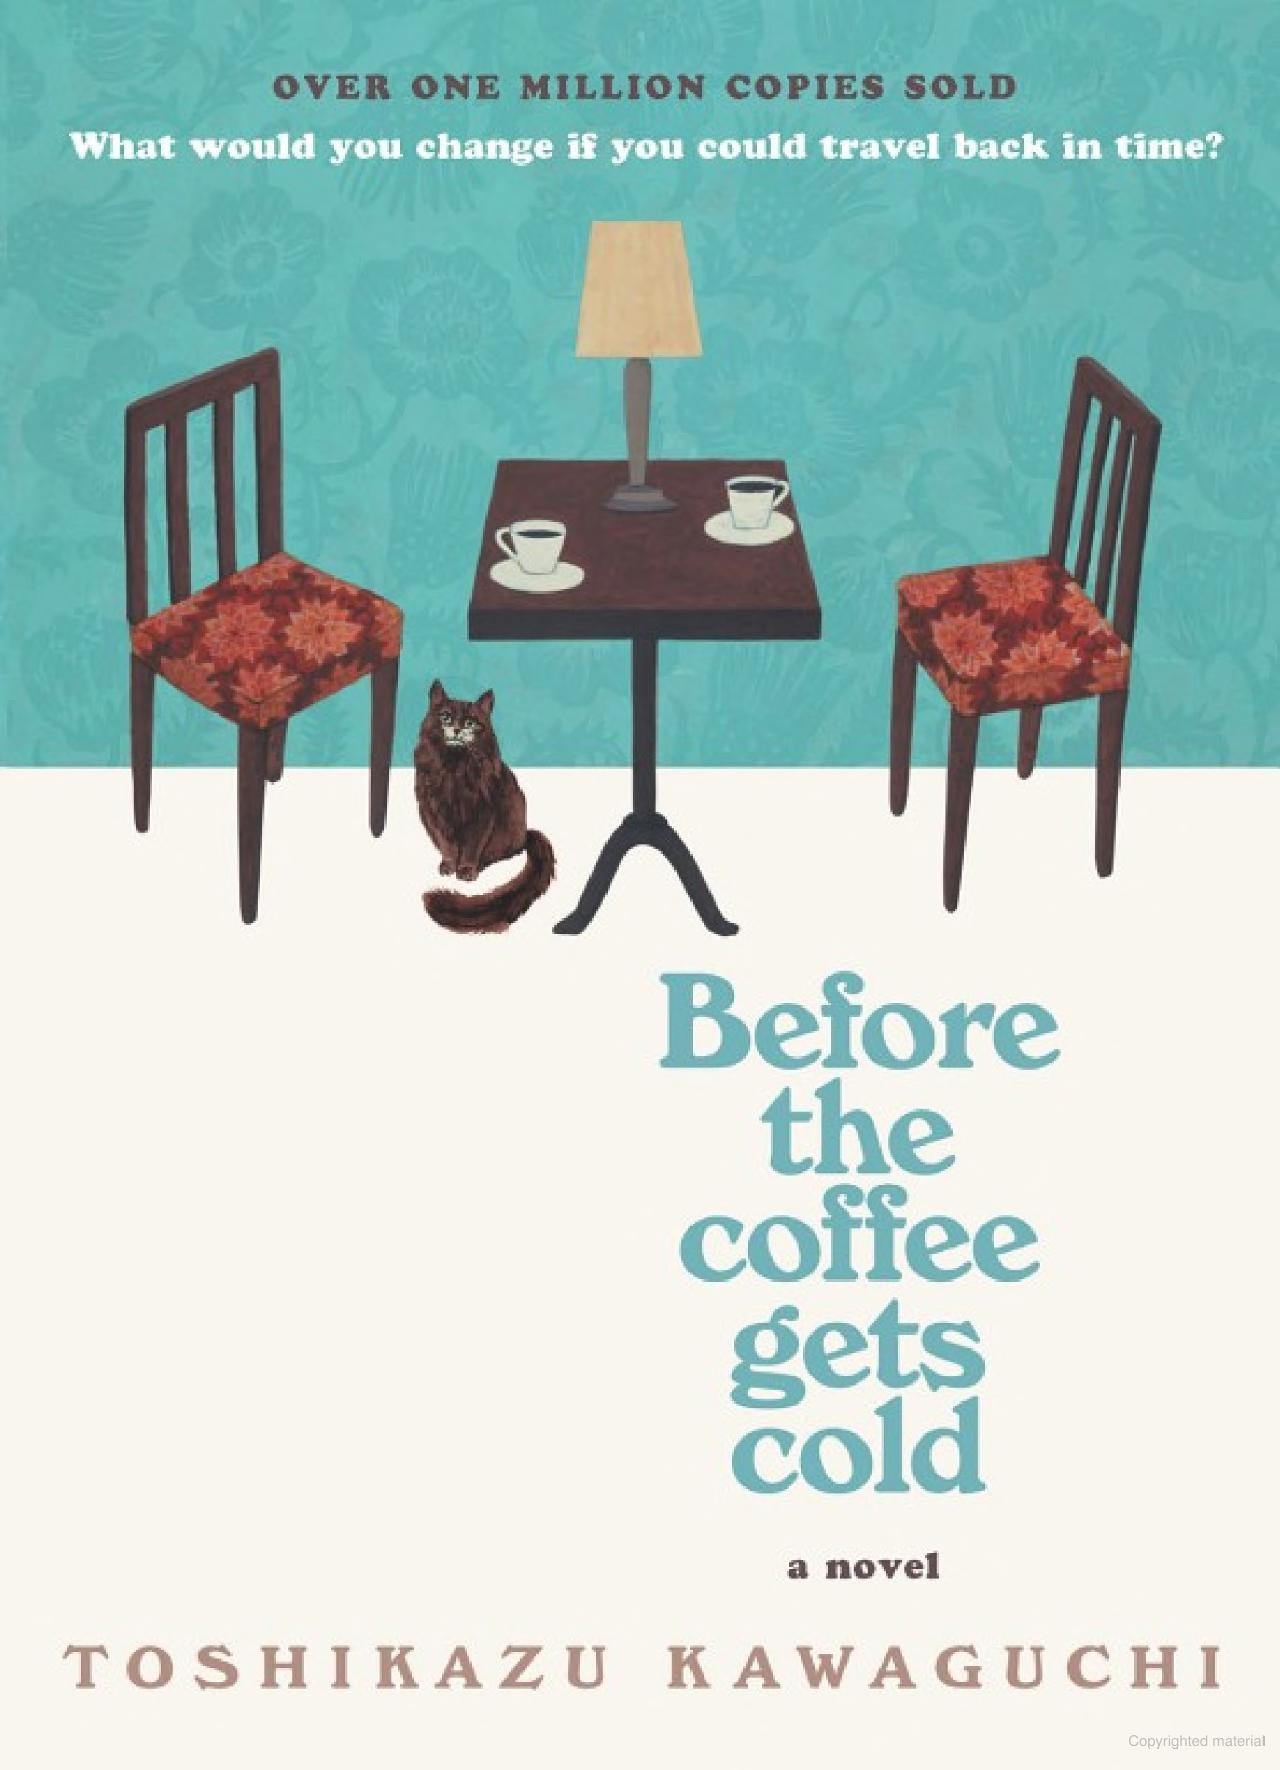 Before the Coffee Gets Cold
Novel by Toshikazu Kawaguchi